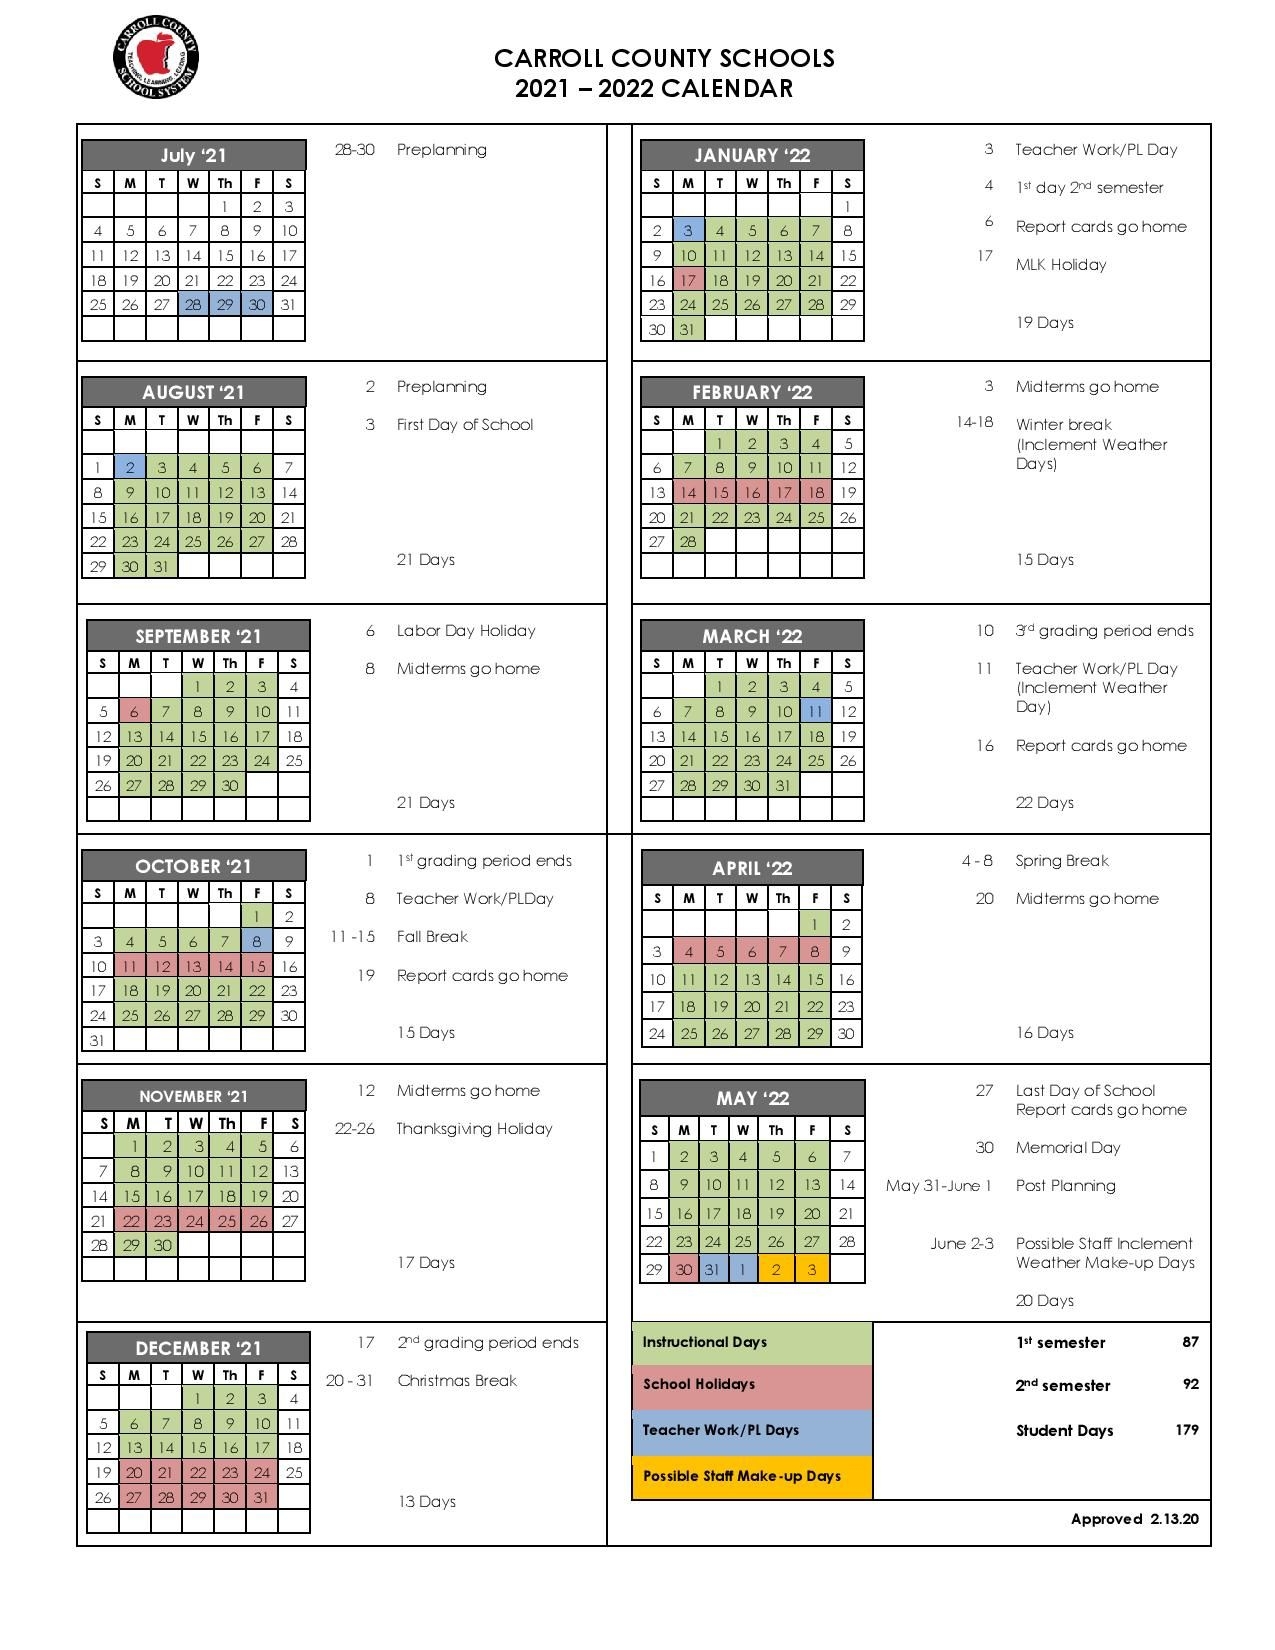 Carroll County Schools Calendar 2021-2022 In Pdf